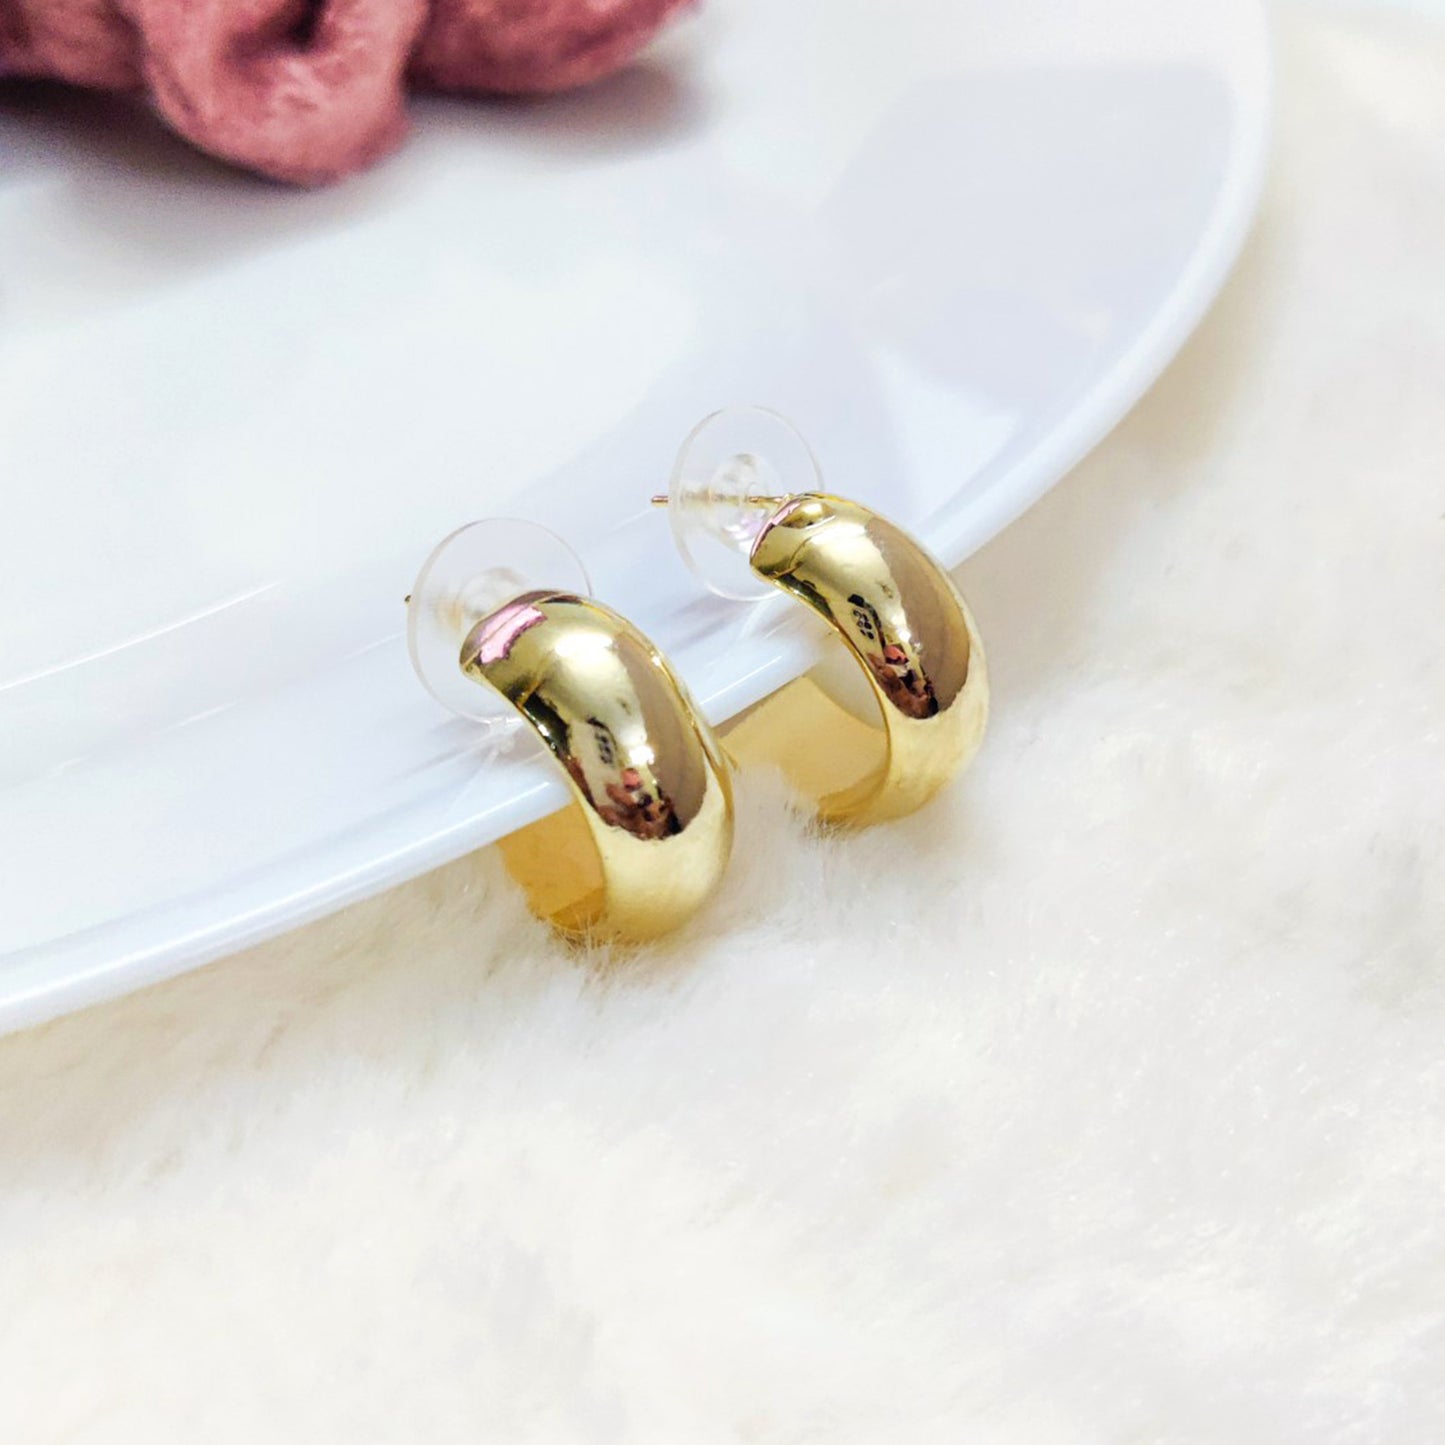 Golden Huggie Earrings